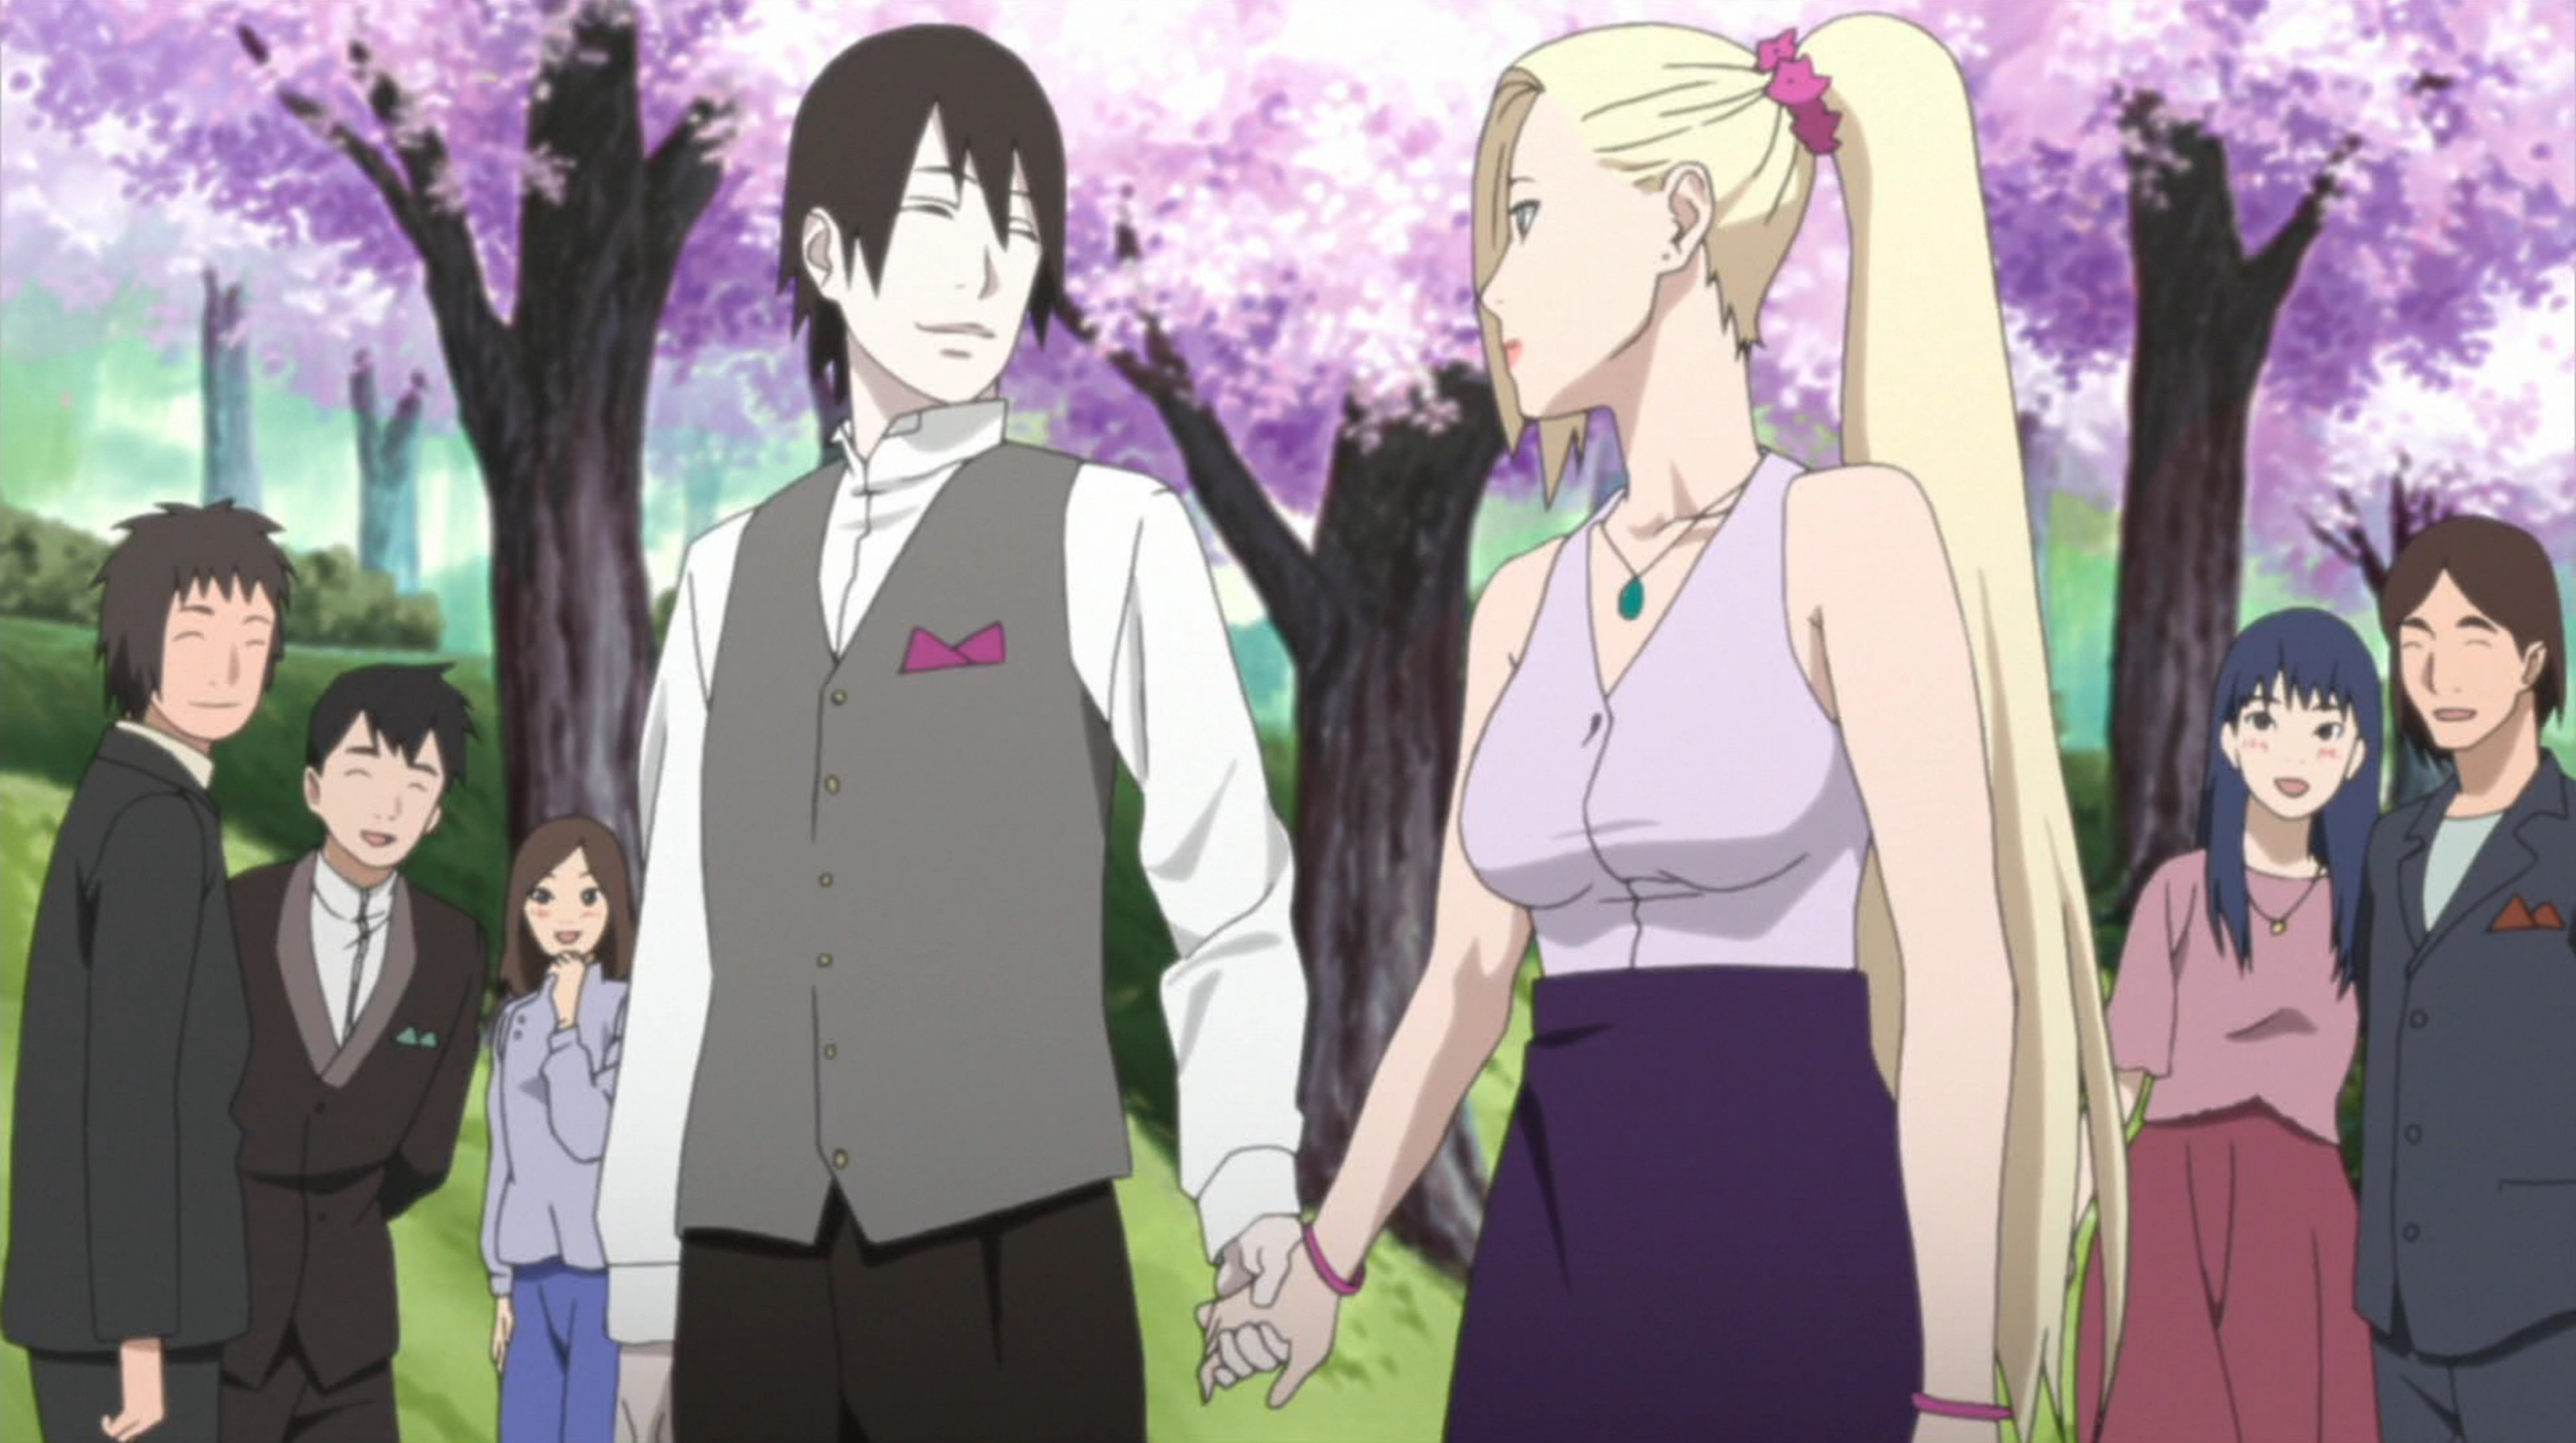 3840x2151 Ino attending Naruto and Hinata's wedding with Sai.